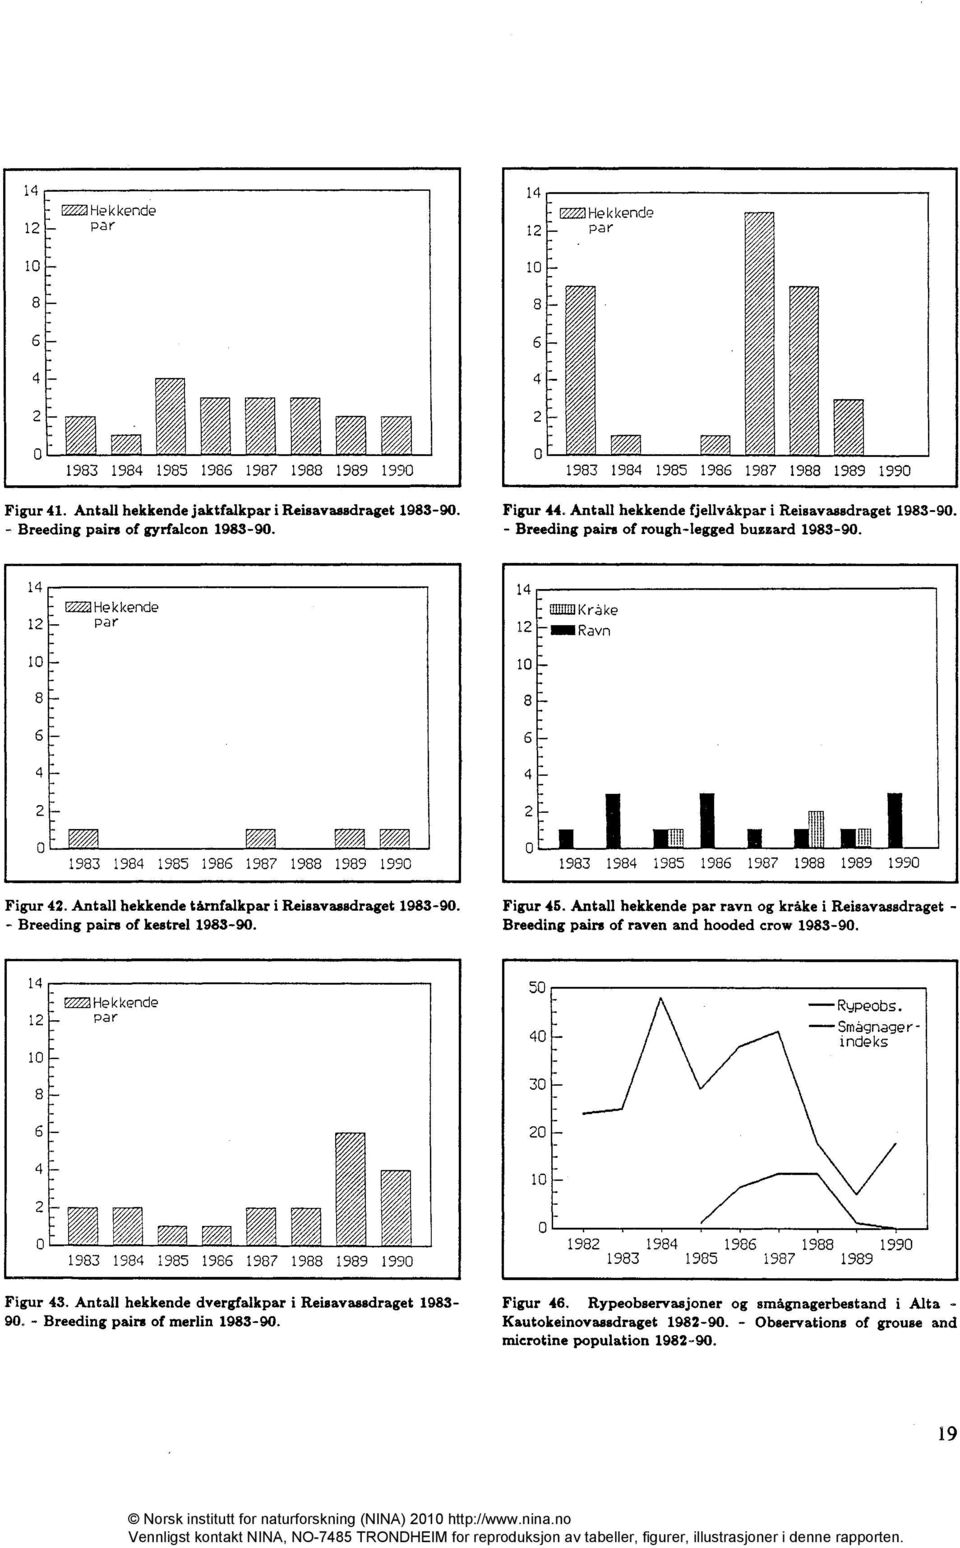 Antall hekkende dvergfalkpar i Reisavassdraget 1983-9. - Breeding pairs of merlin 1983-9.